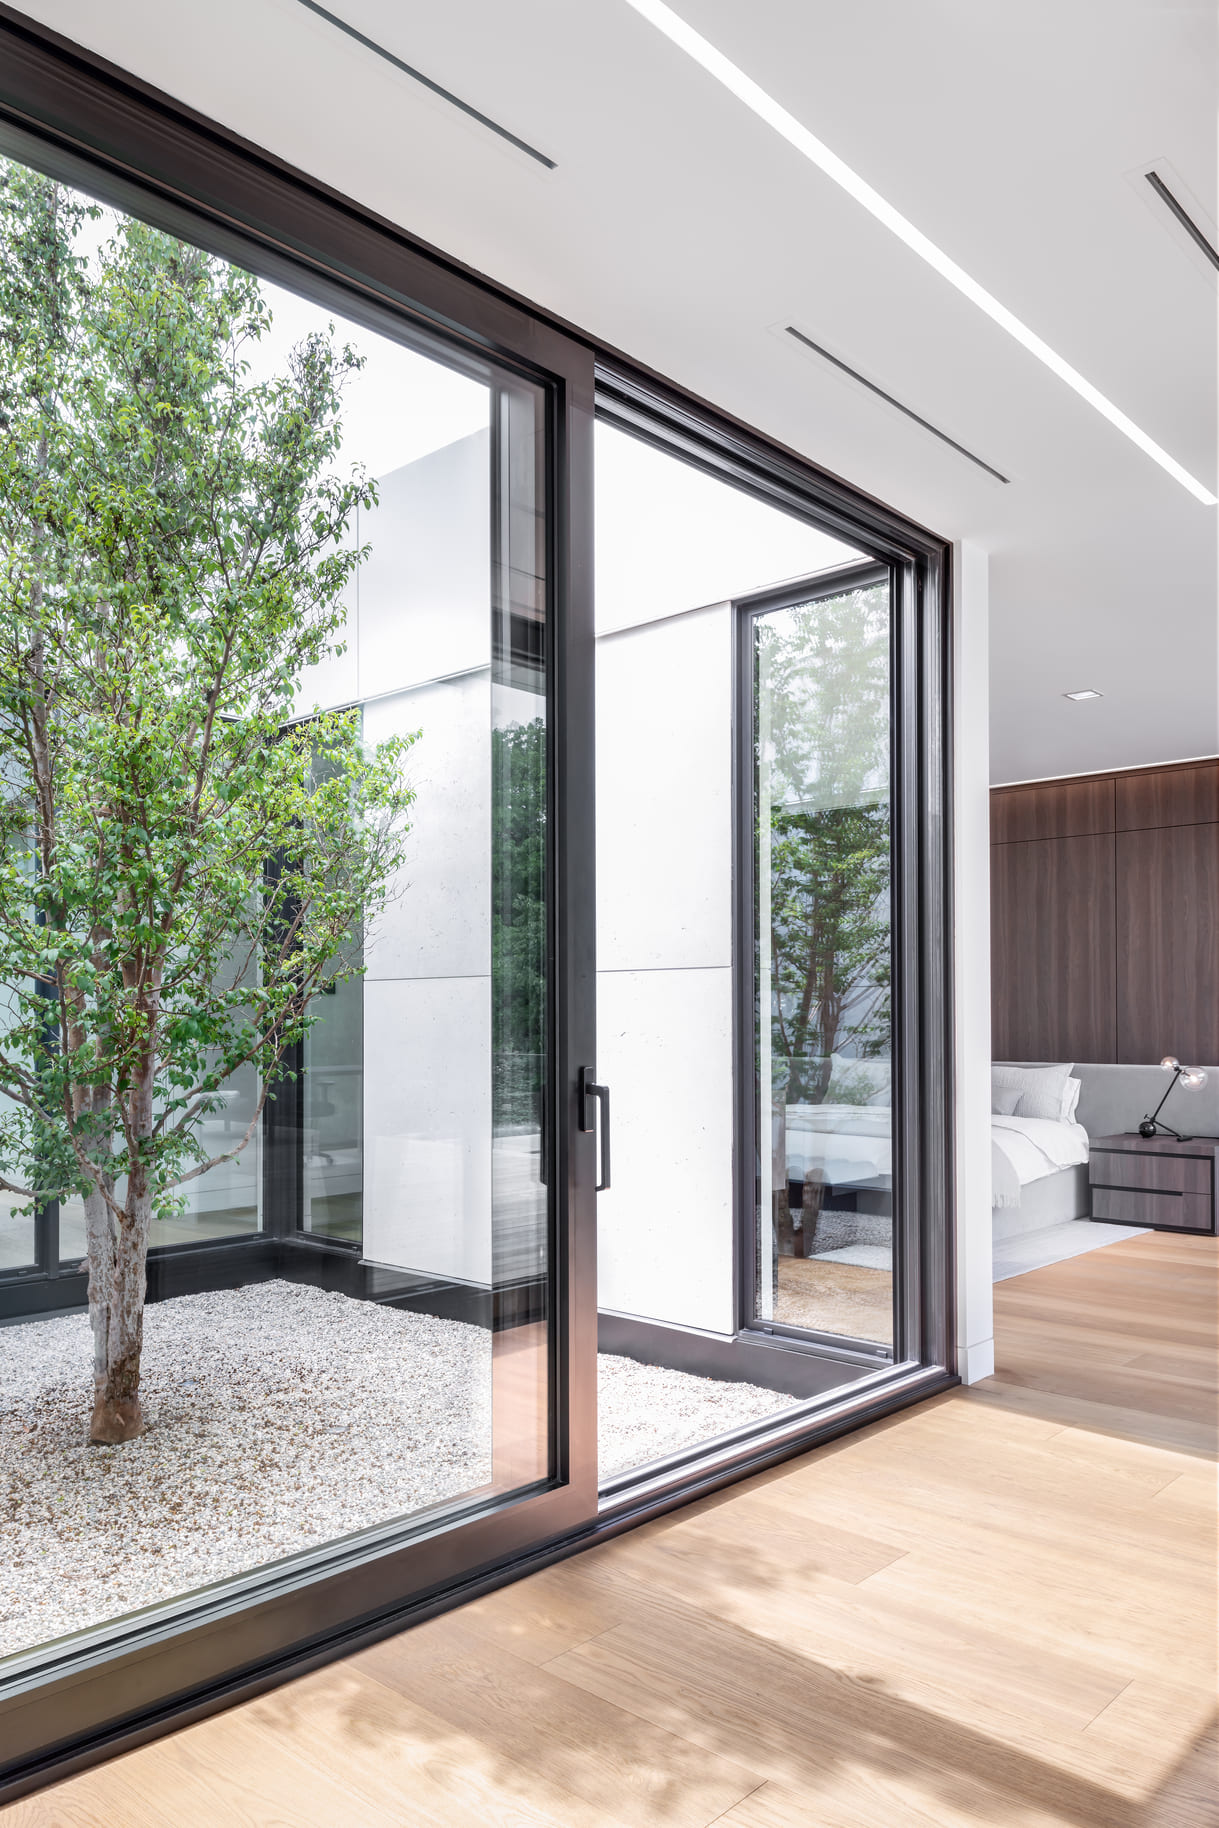 DB Custom Homes is the future of modern luxury, building stunning custom homes across Ontario.